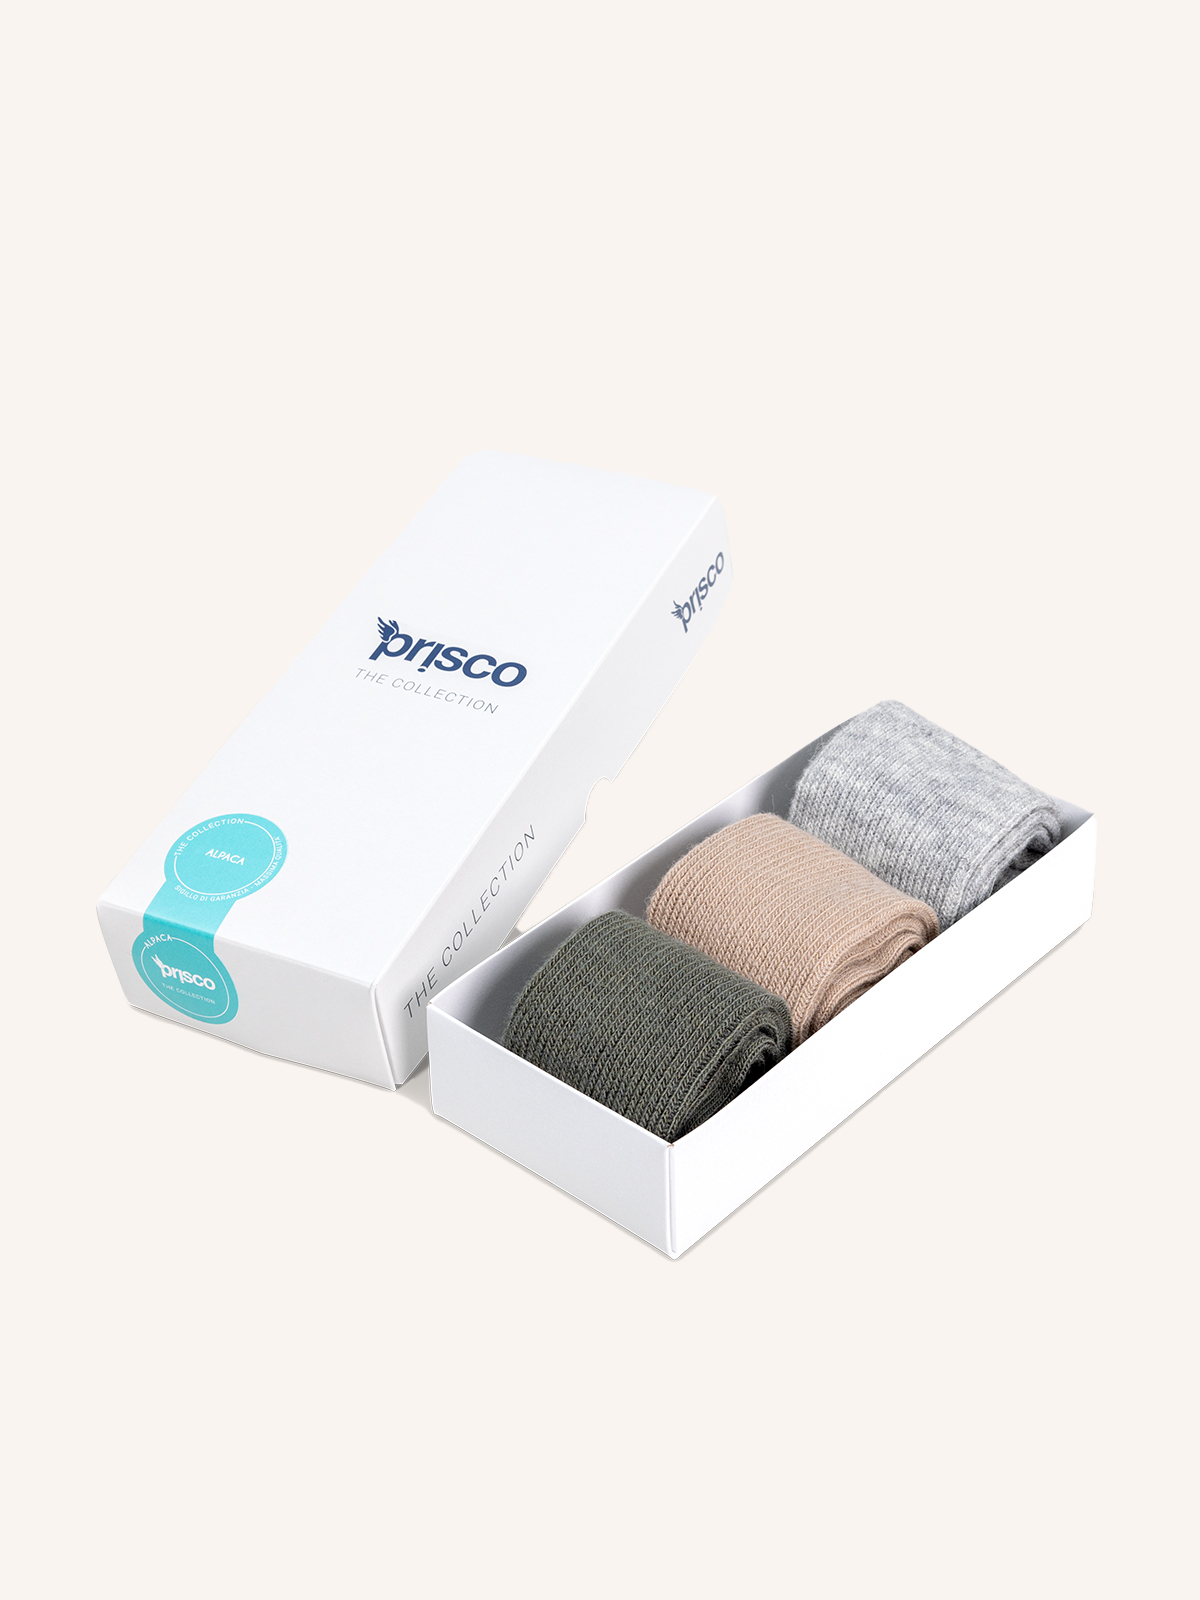 Short Alpaca Sock for Men | Plain Color | Pack of 3 pairs | Alpa 1:1 UC